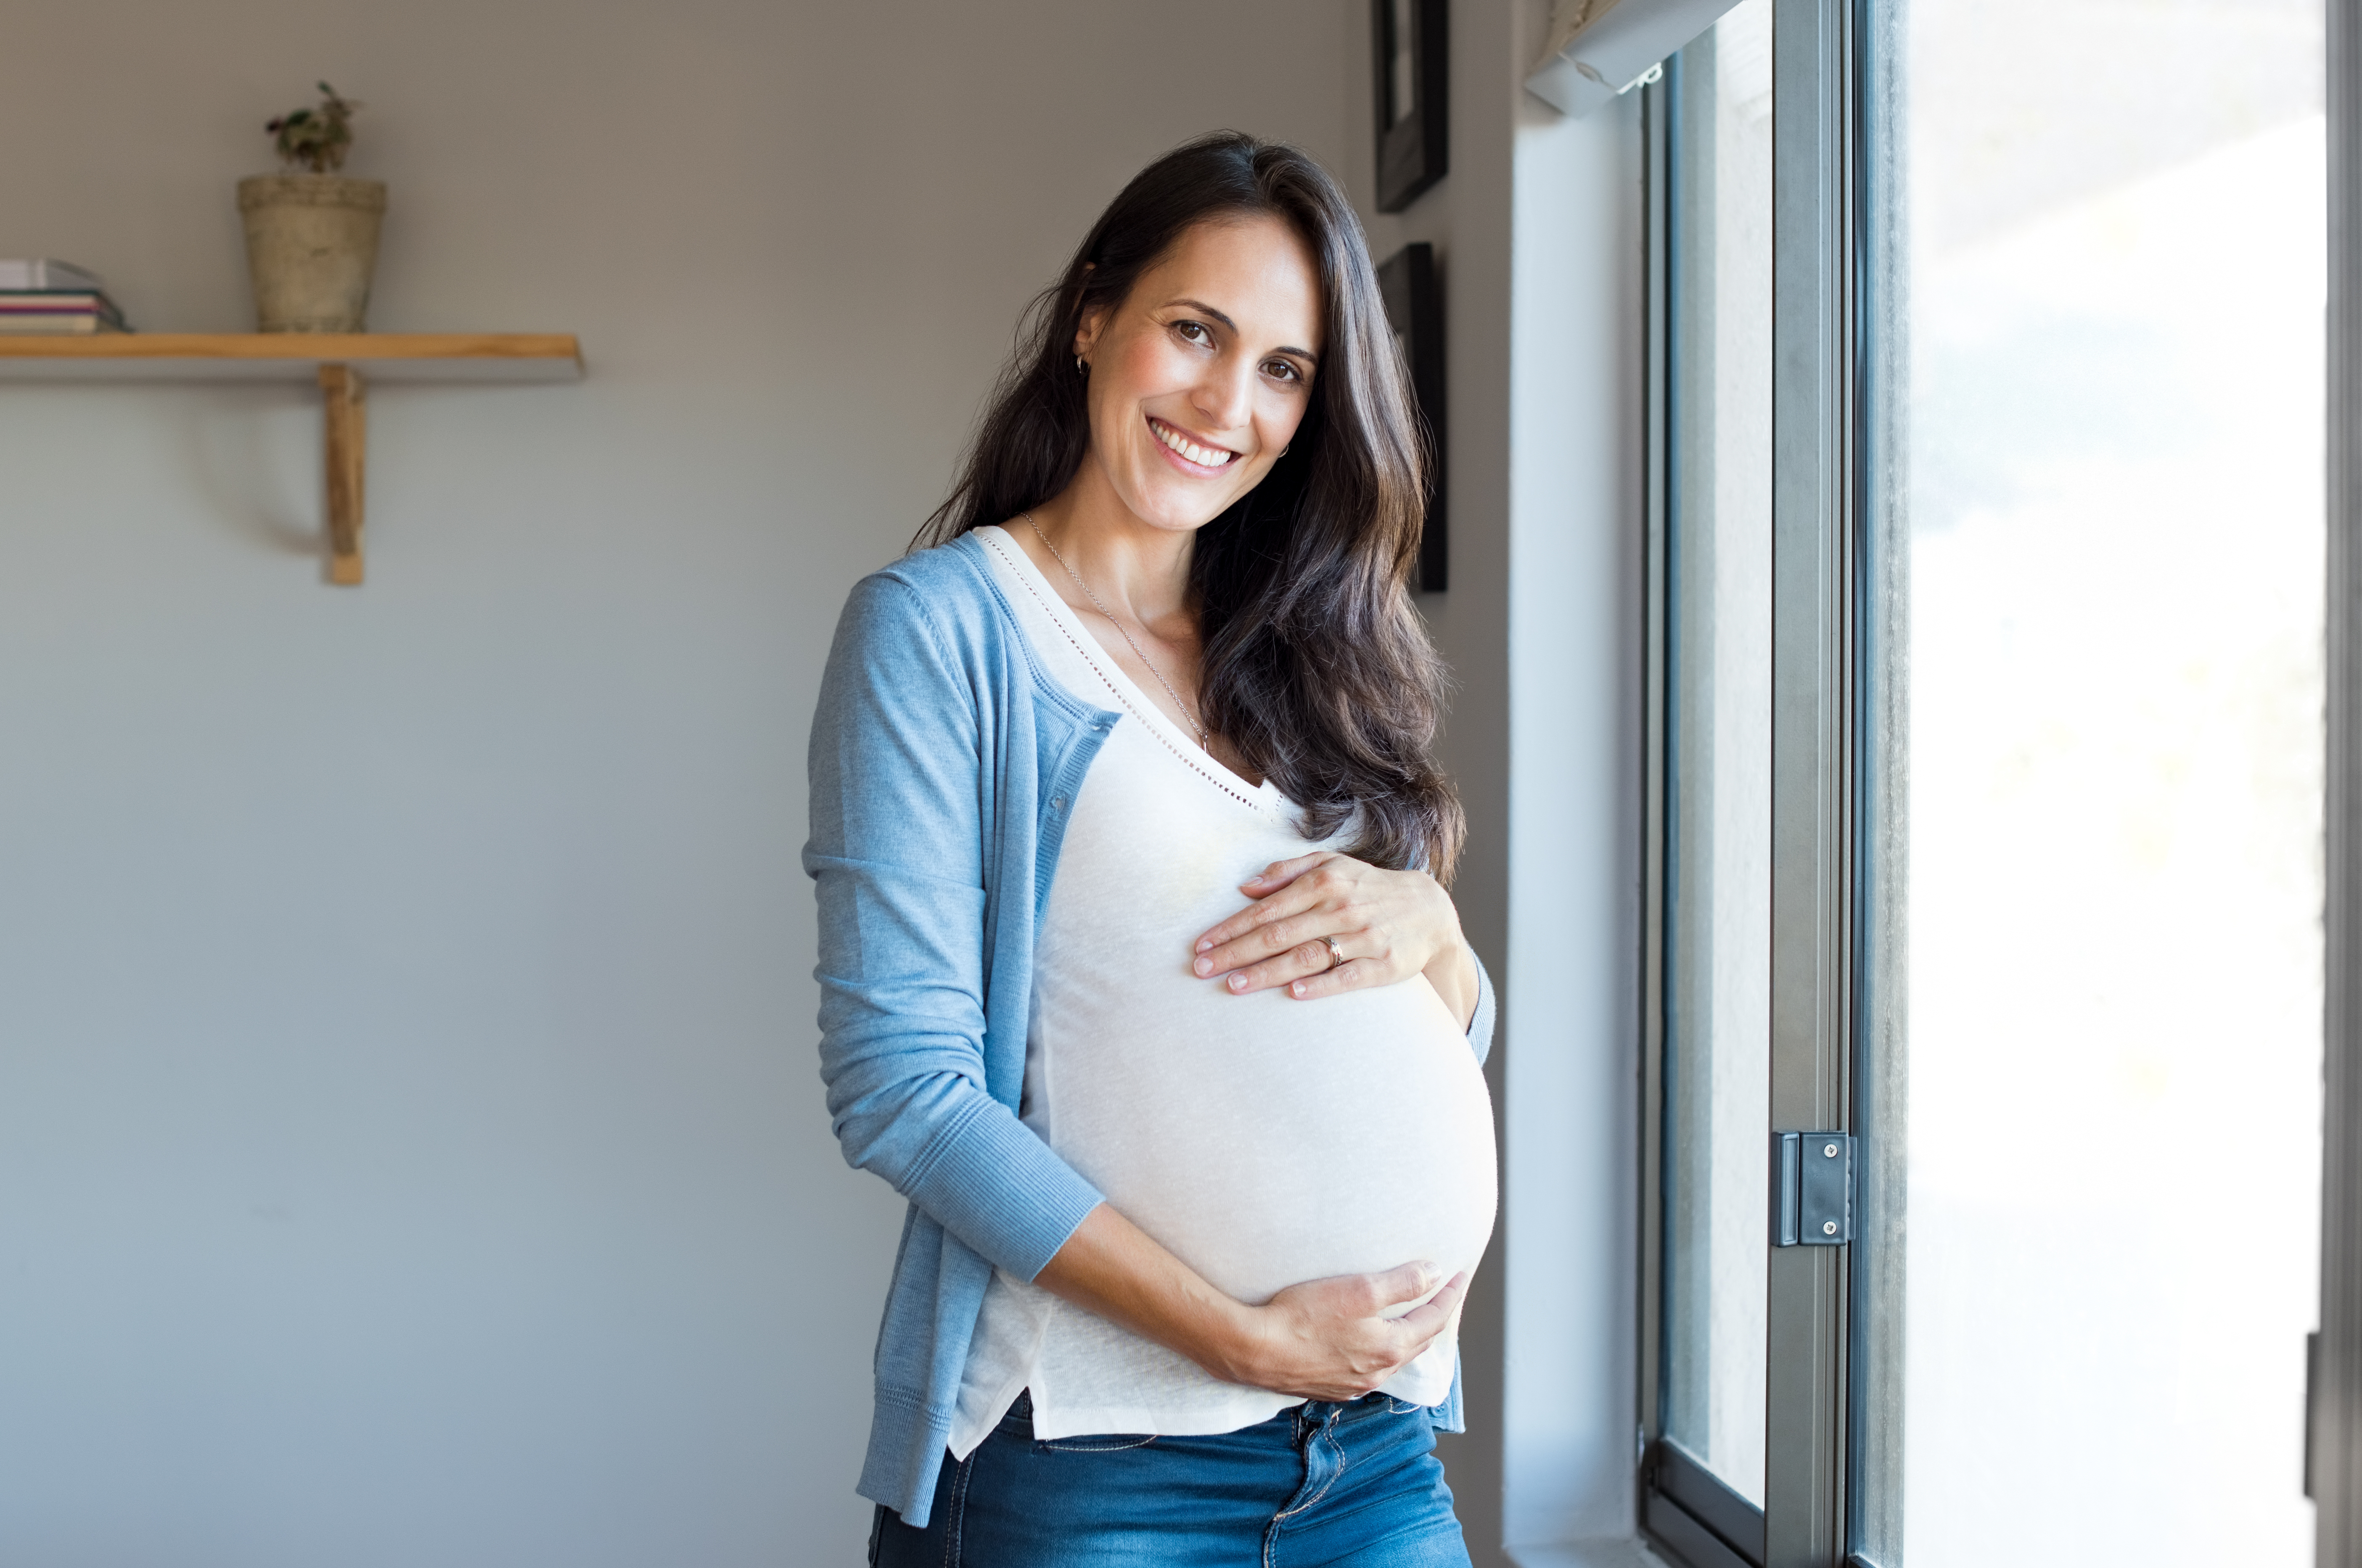 Femme enceinte heureuse tenant son baby bump | Source : Shutterstock